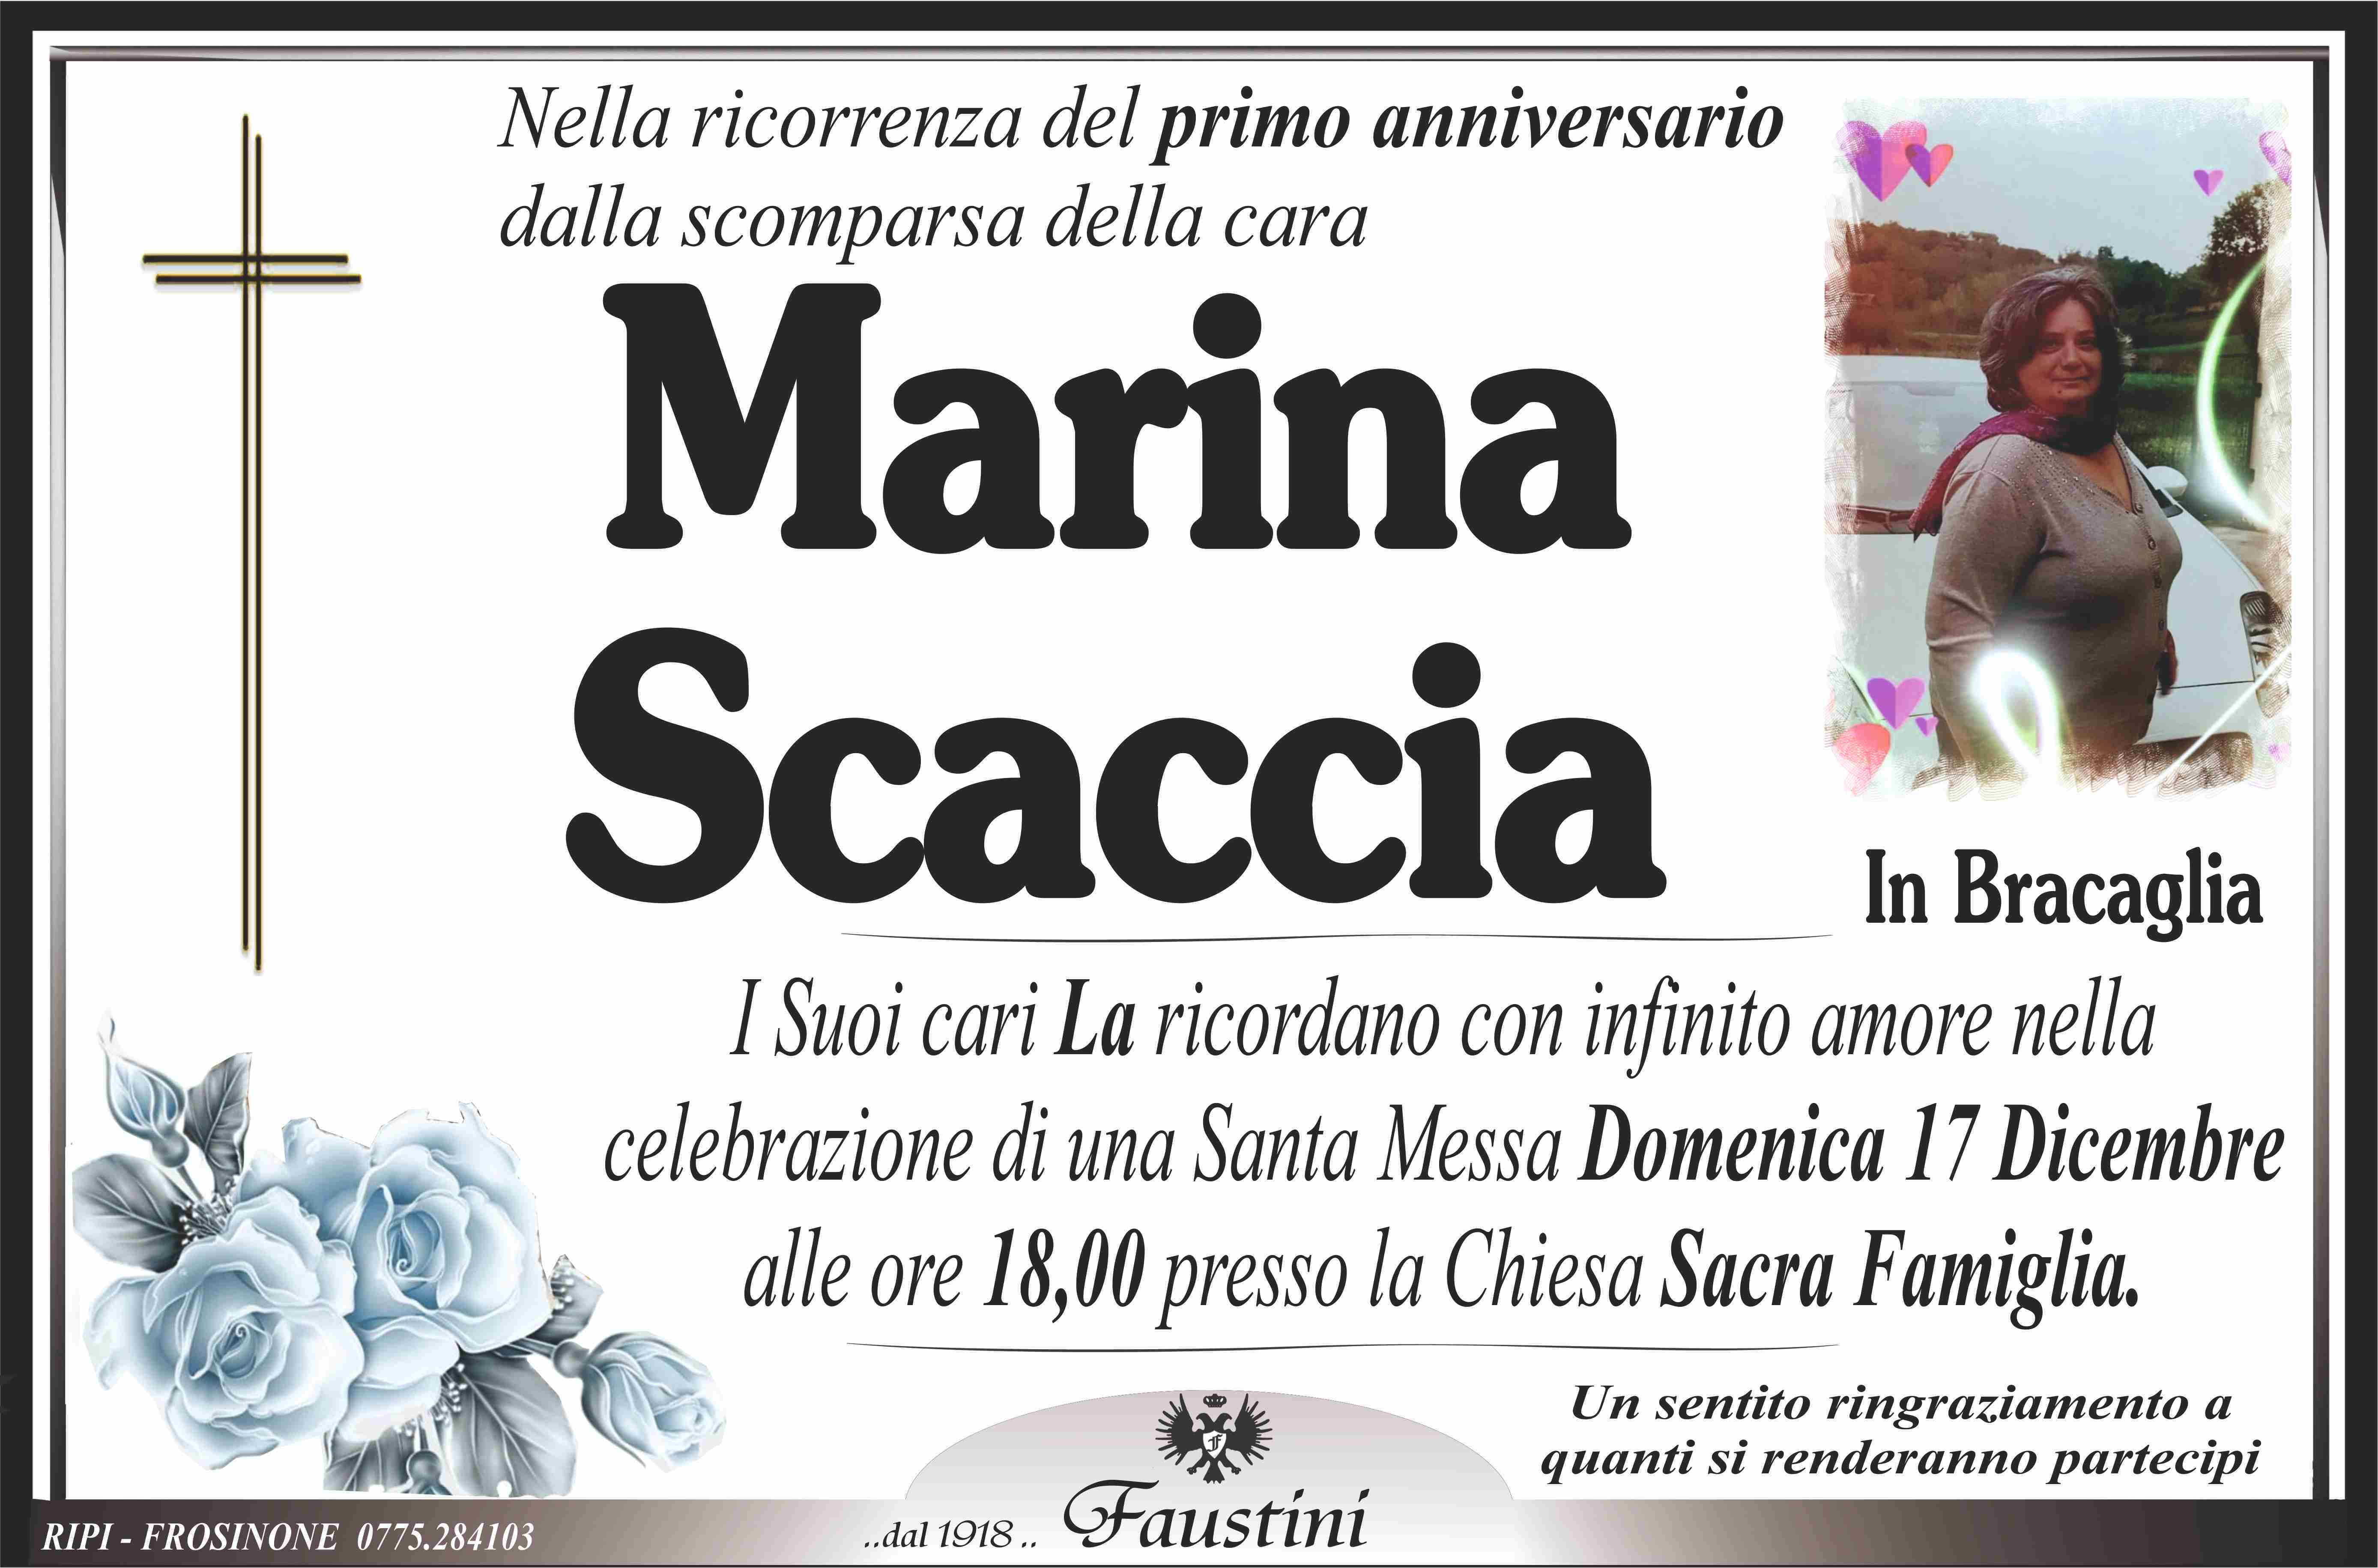 Marina Scaccia